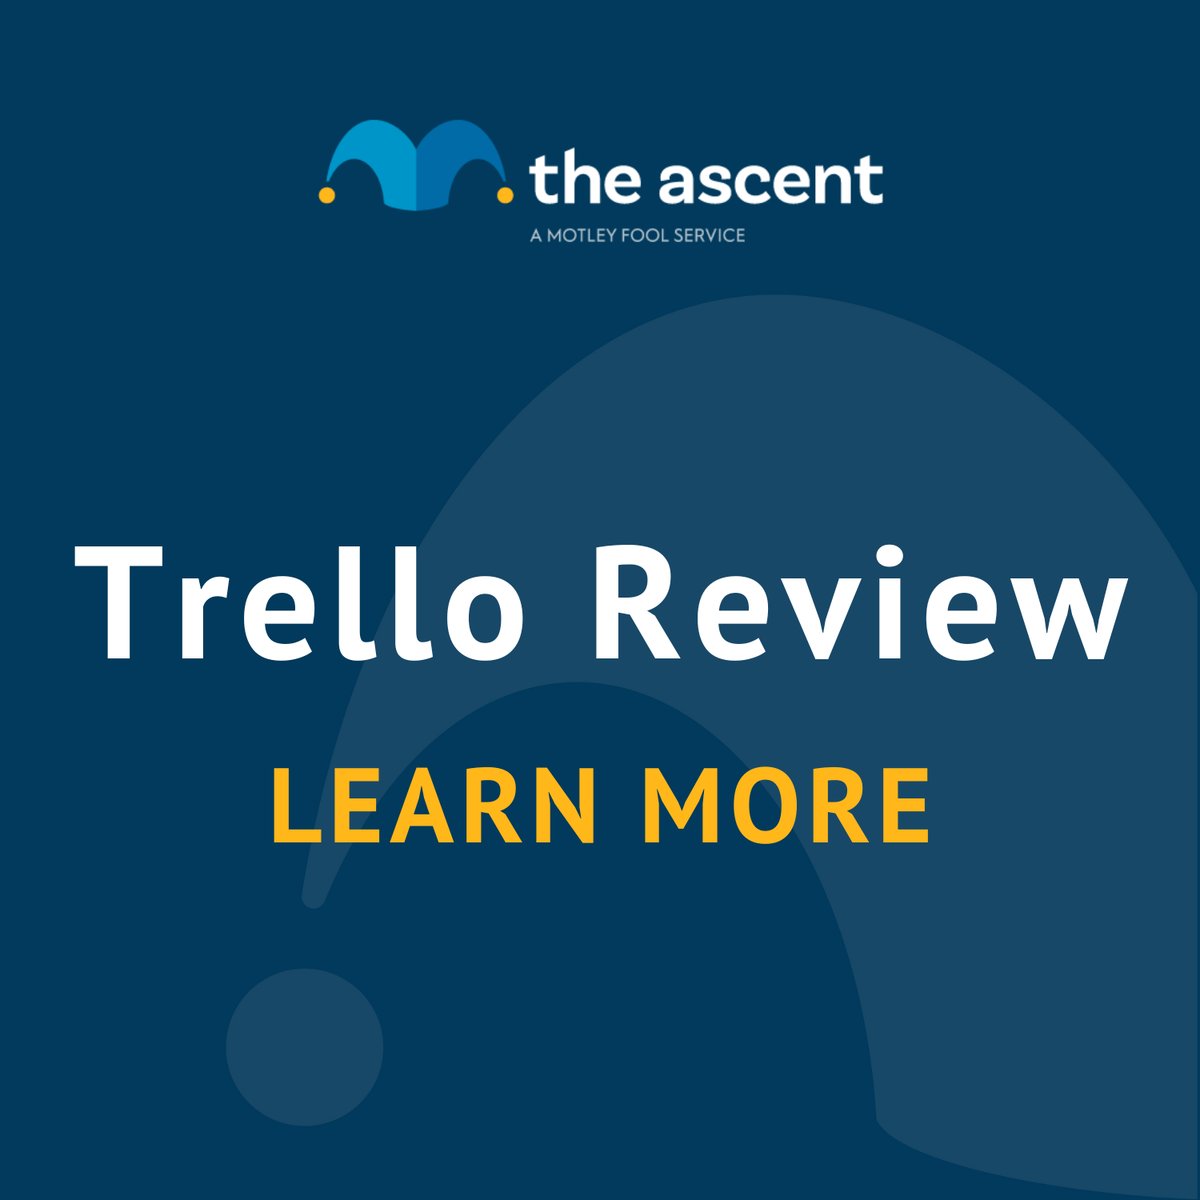 Trello has a new look, logo and tools